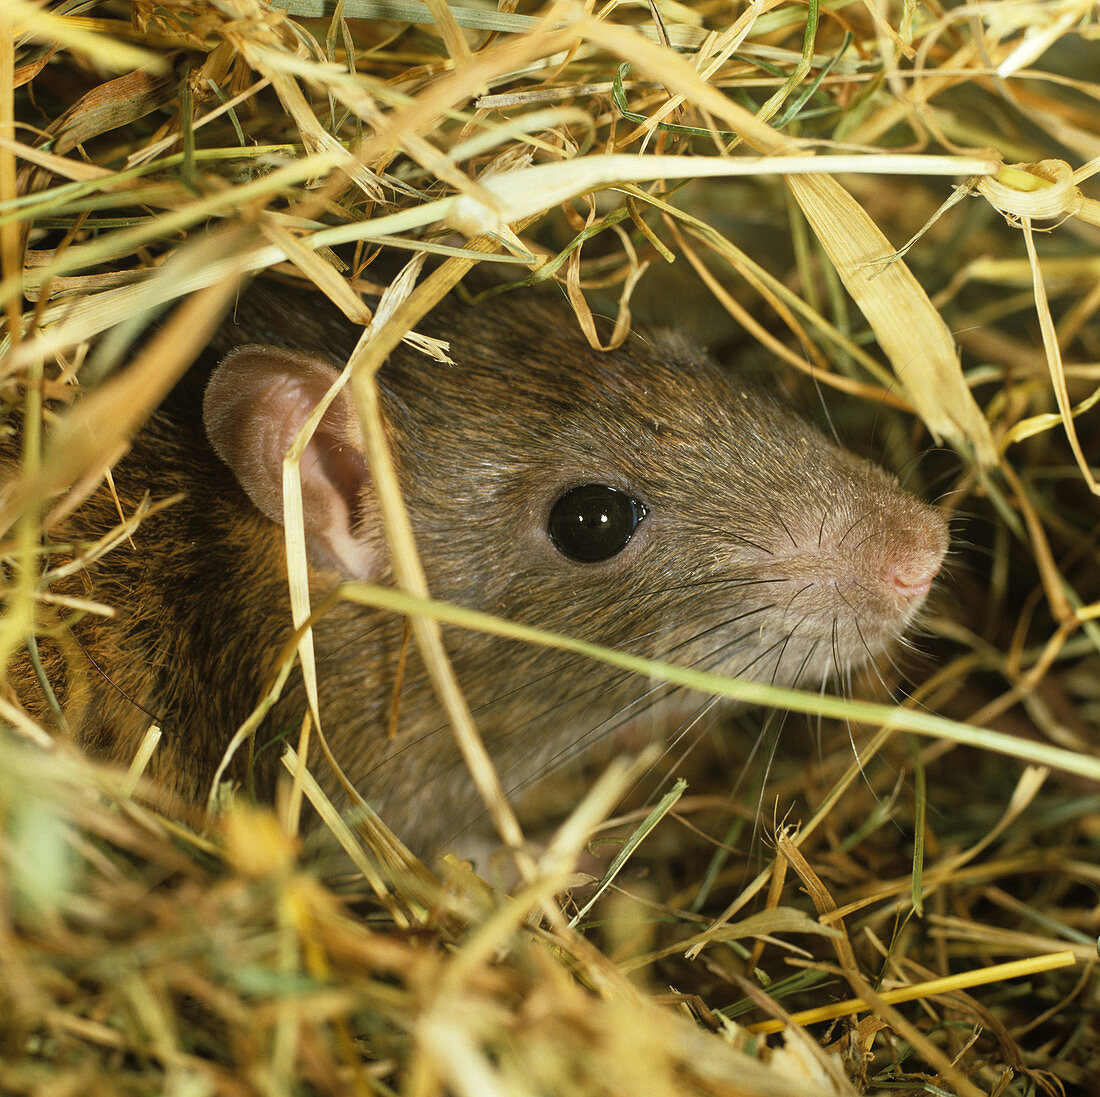 Brown rat in hay